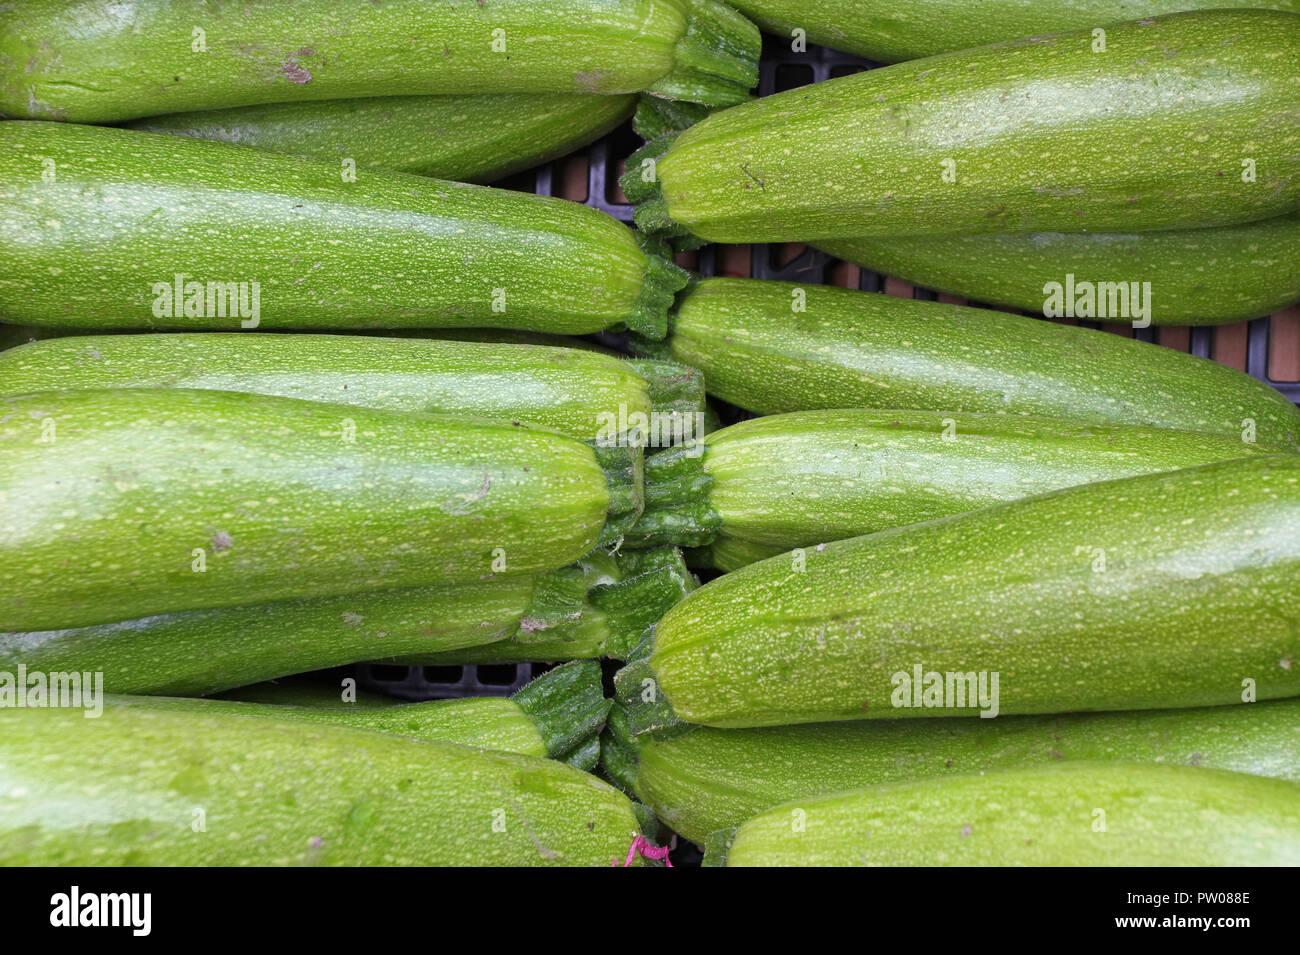 Zucchini Fresh Green Vegetables On Local Farmer Market